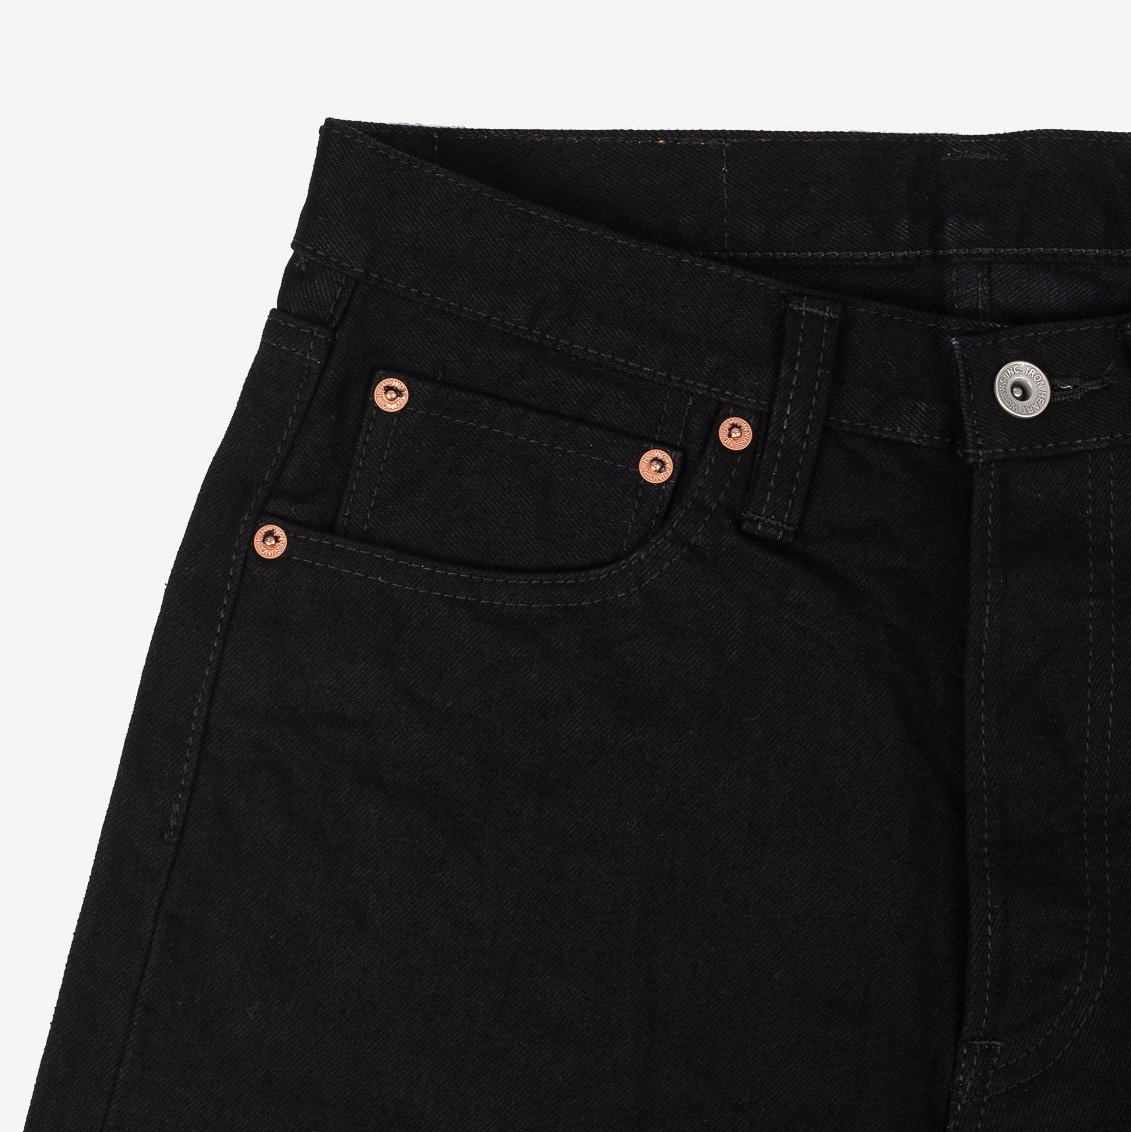 IH-634S-142bb 14oz Selvedge Denim Straight Cut Jeans - Black/Black - 6